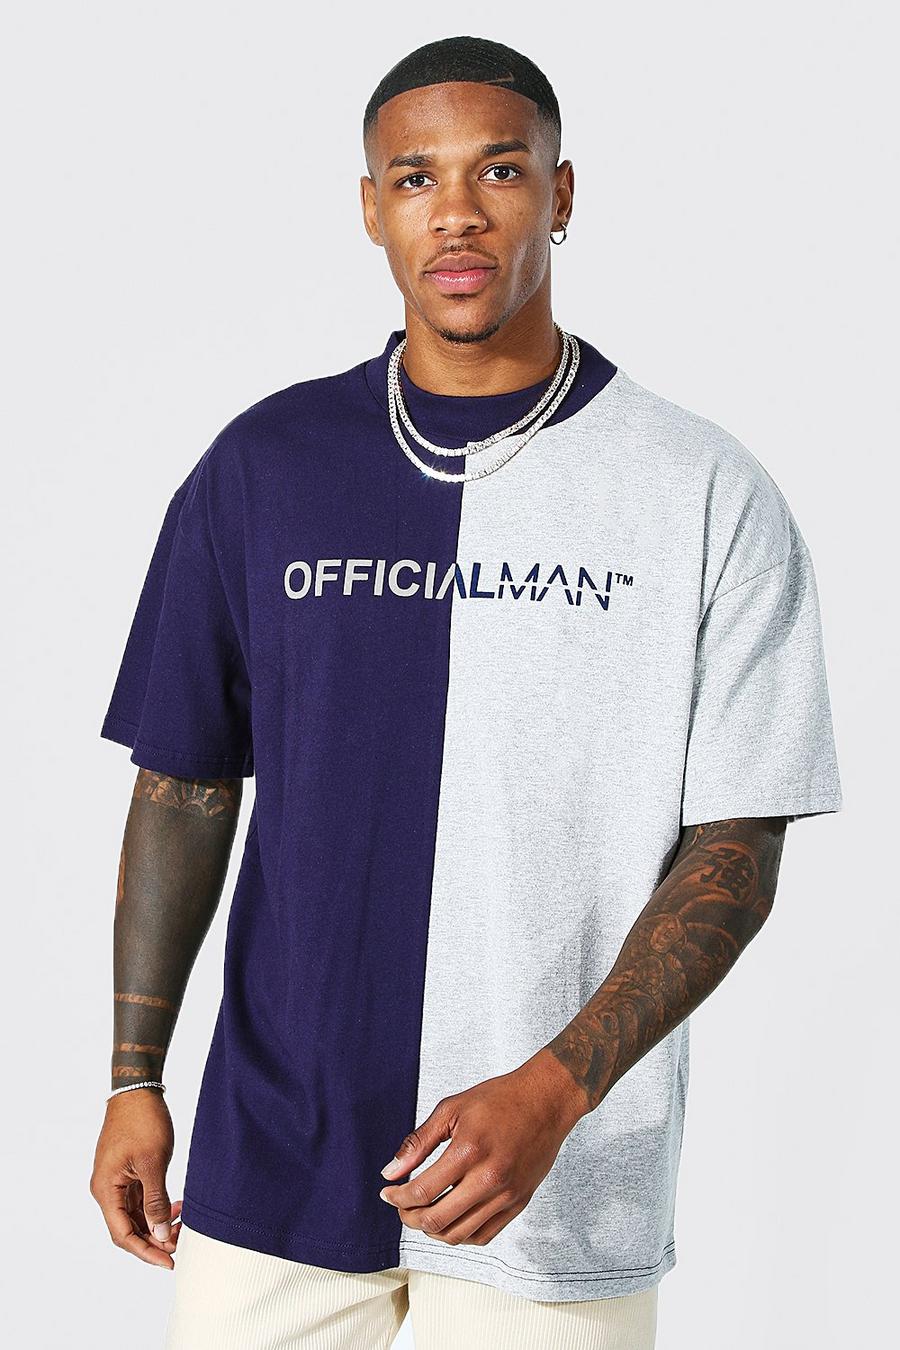 Camiseta MAN Official oversize dividida, Navy azul marino image number 1